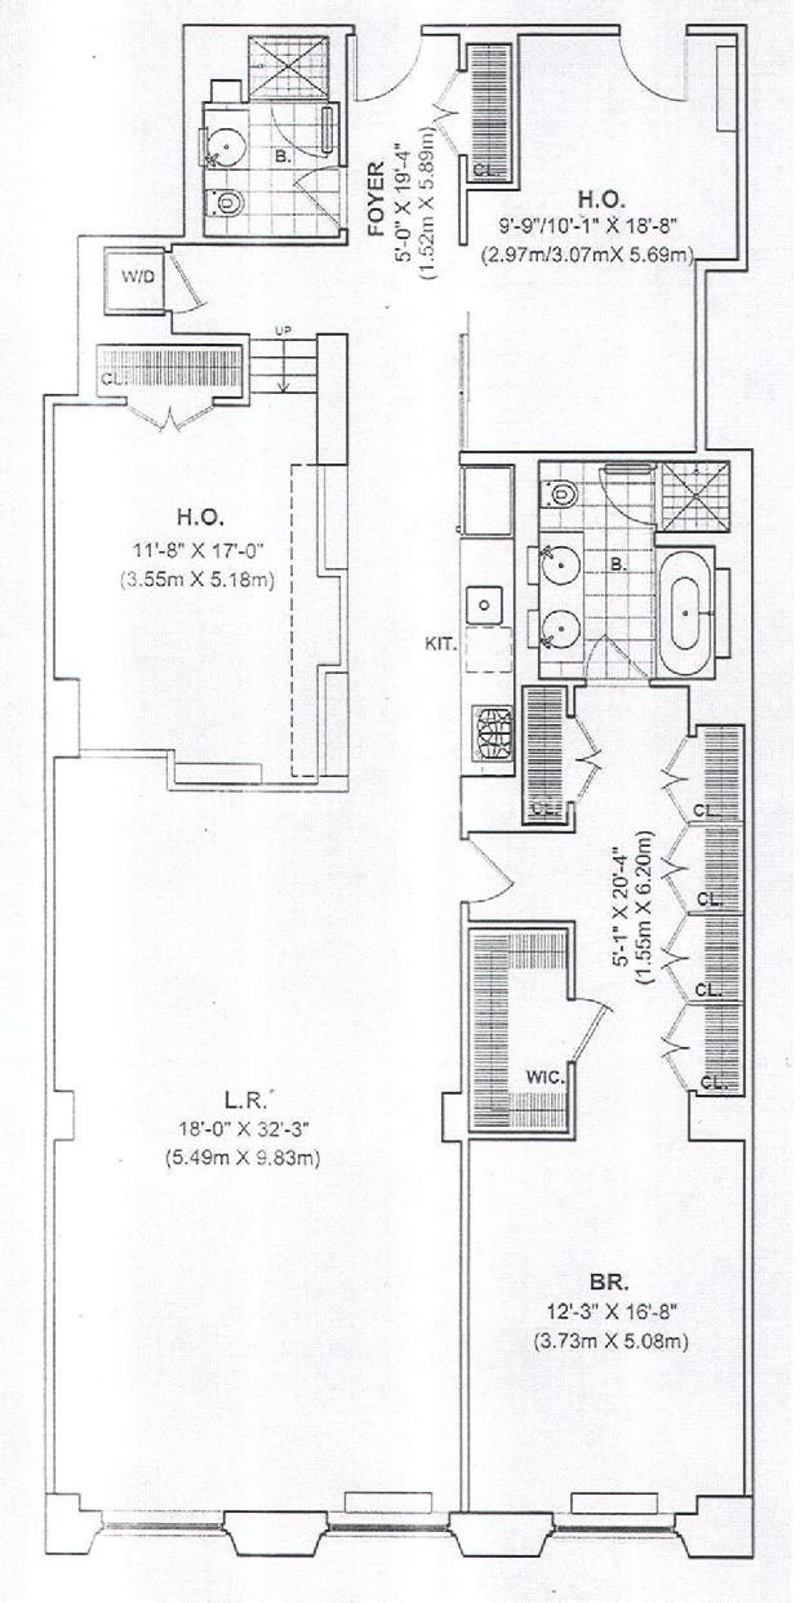 Floorplan for 15 Broad Street, 2314